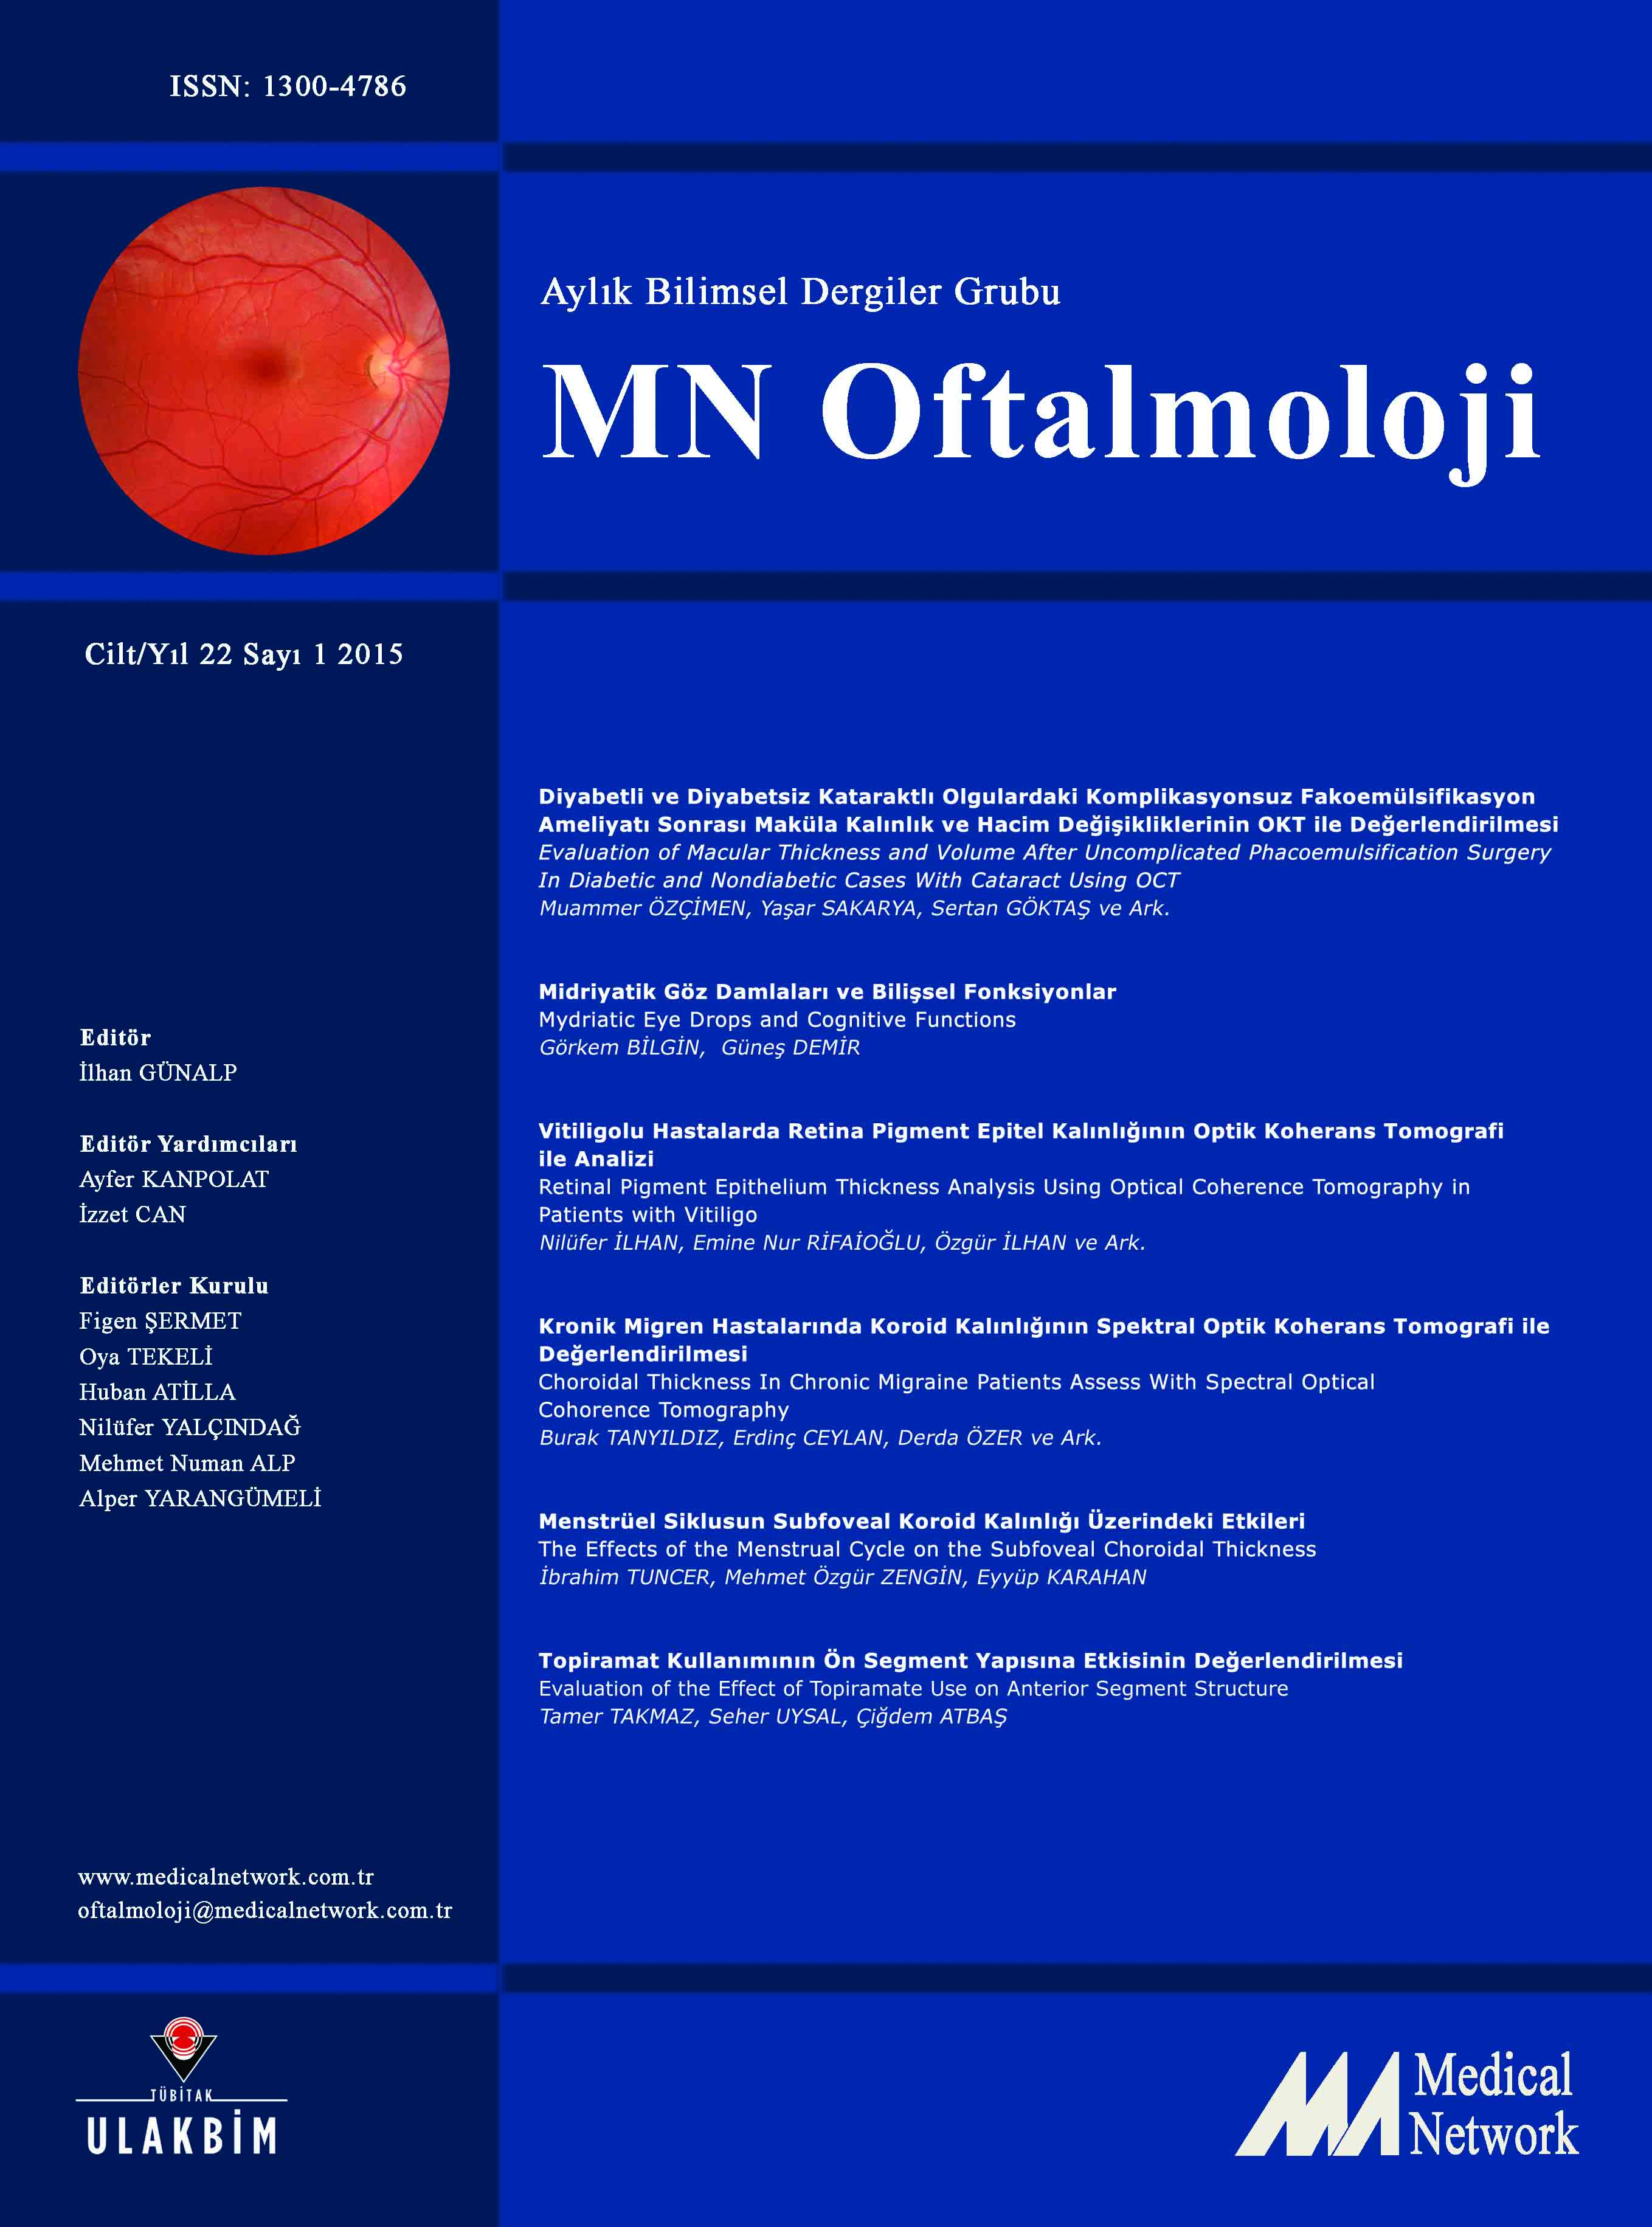 <p>MN Oftalmoloji Cilt: 22 Say: 1 2015 (MN Ophthalmology Volume: 22 No 1 2015)</p>